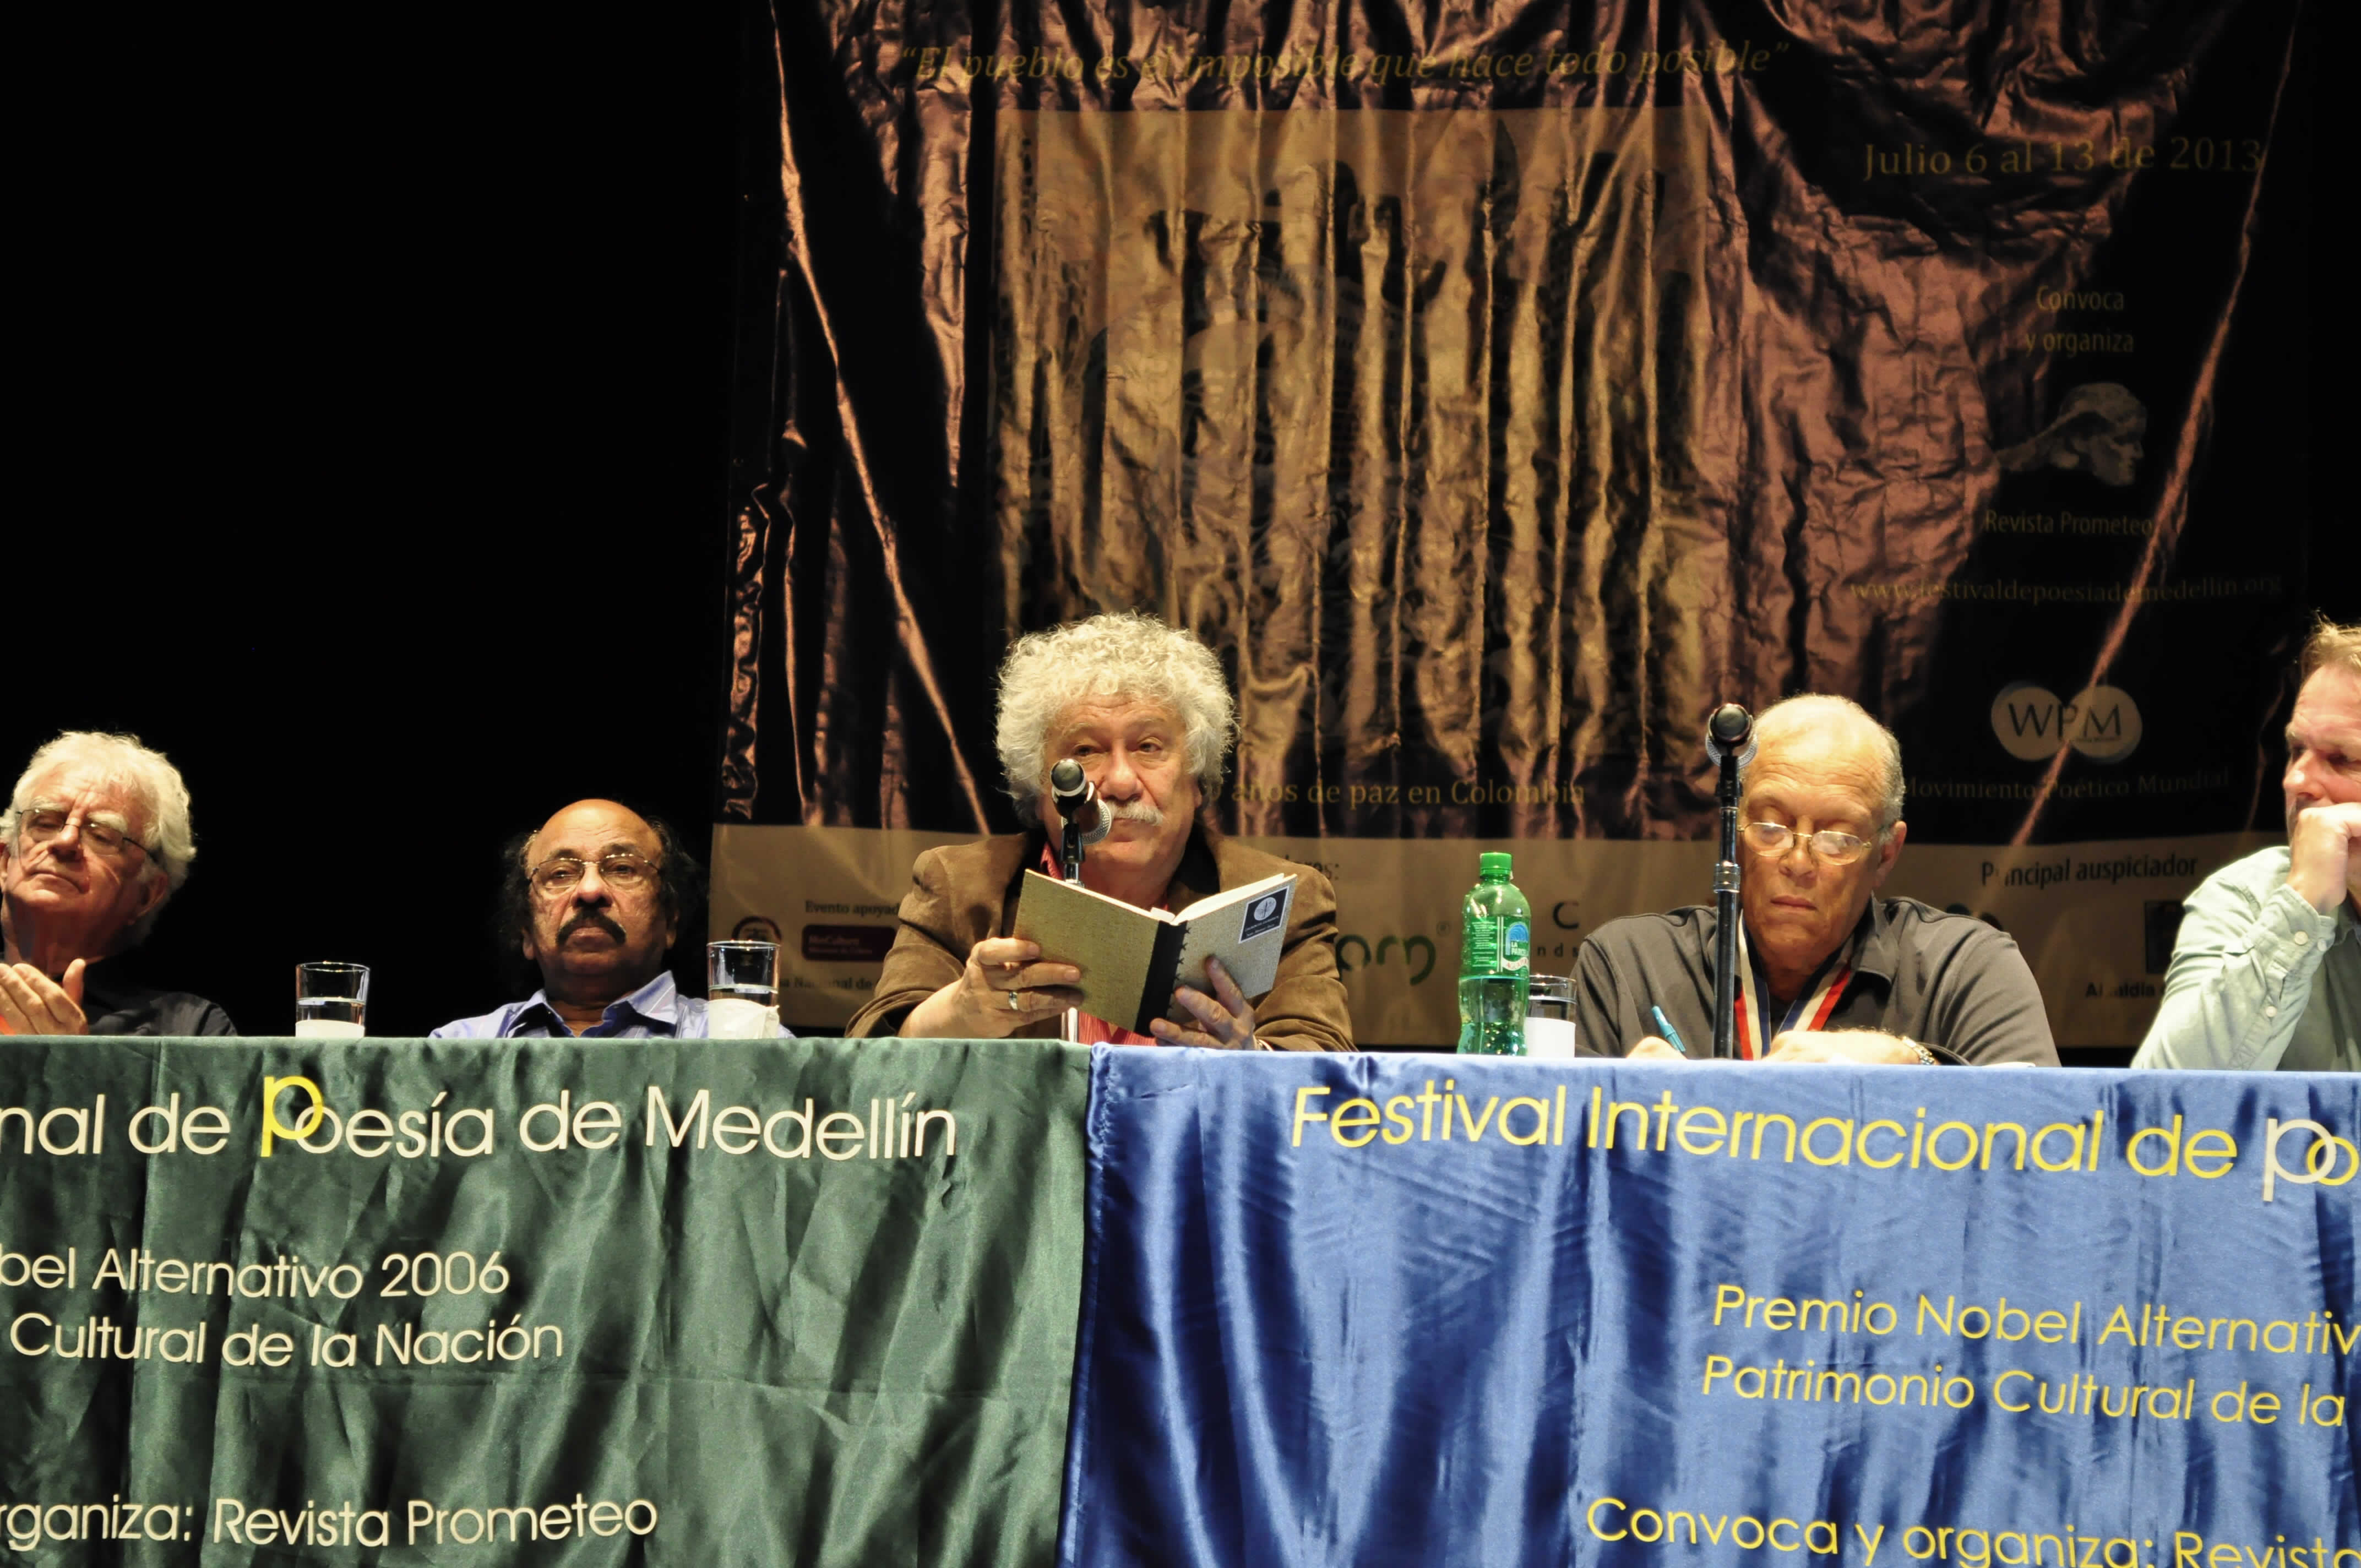 Mesa de lectura, de izquierda a derecha: Jan Erik Vold (Noruega),K. Satchidanandan (India), Juan Manuel Roca (Colombia), Josaphat Robert Large (Haití), Richard Gwyn (Gales).